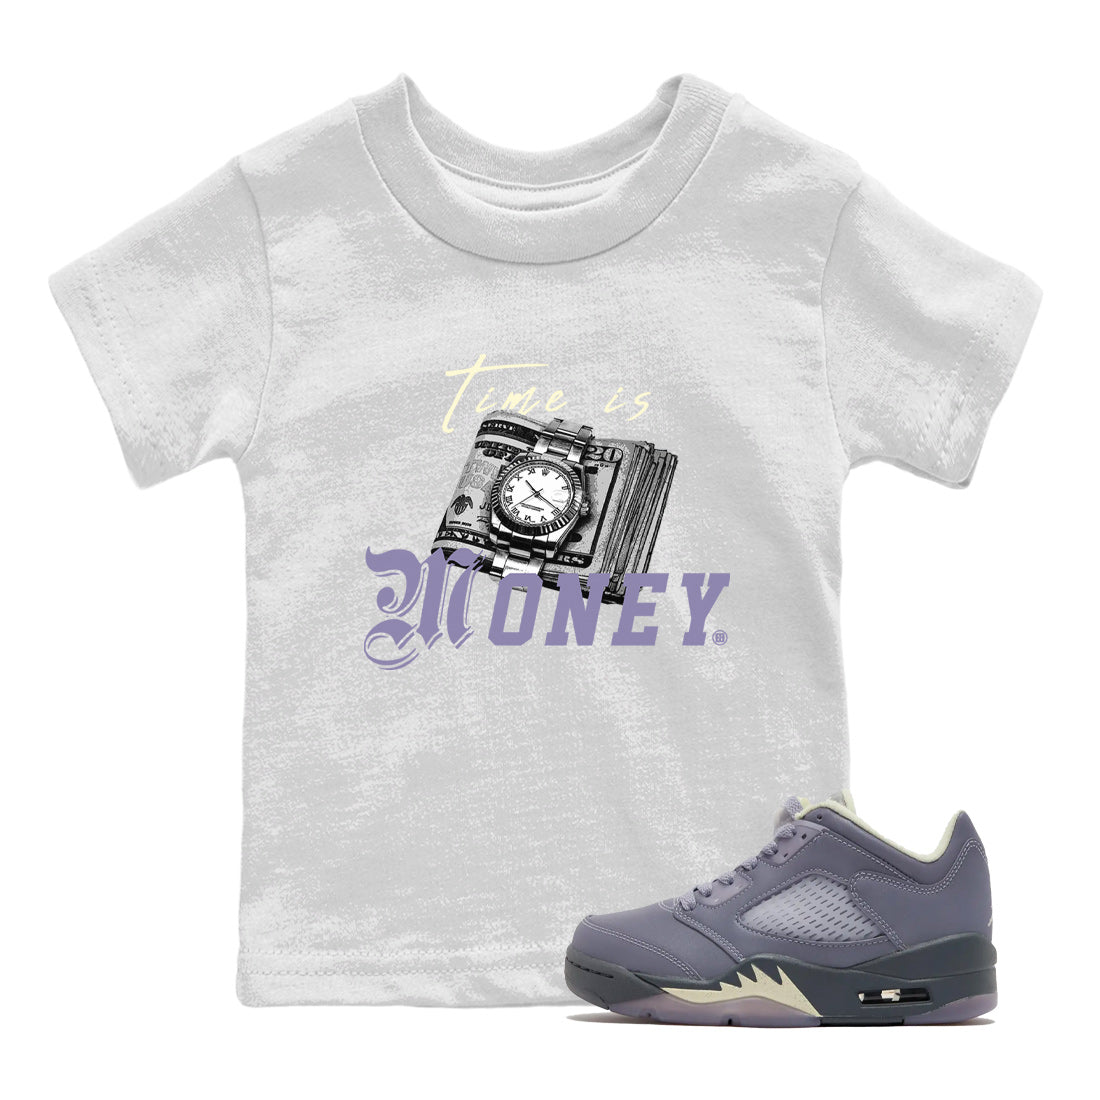 5s Indigo Haze Sneaker Match Tees Time Is Money Sneaker T-Shirt Air Jordan 5 Indigo Haze Sneaker Release Tees Kids Shirts White 1